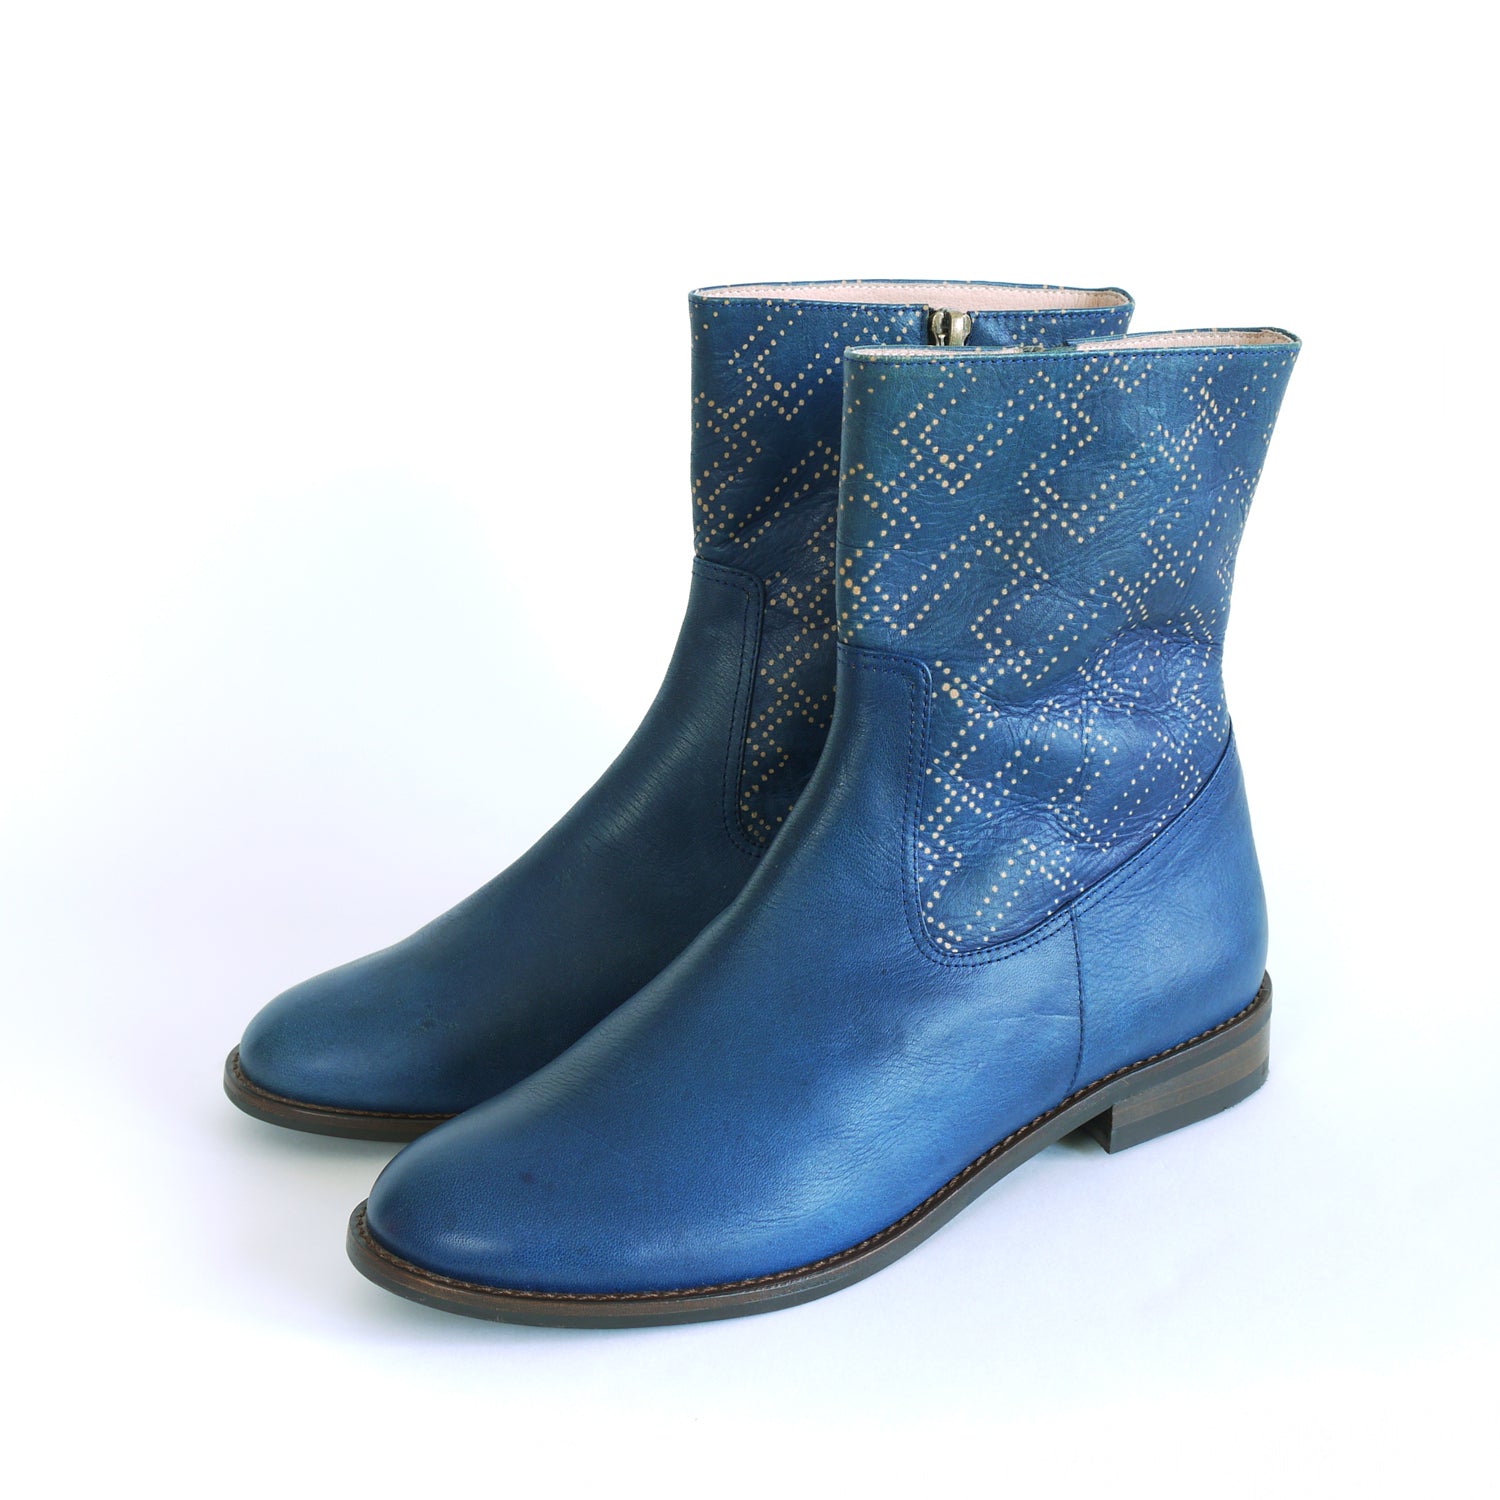 Woman's Ankle Boots.  Indigo dyed leather boots.  SASHIKO